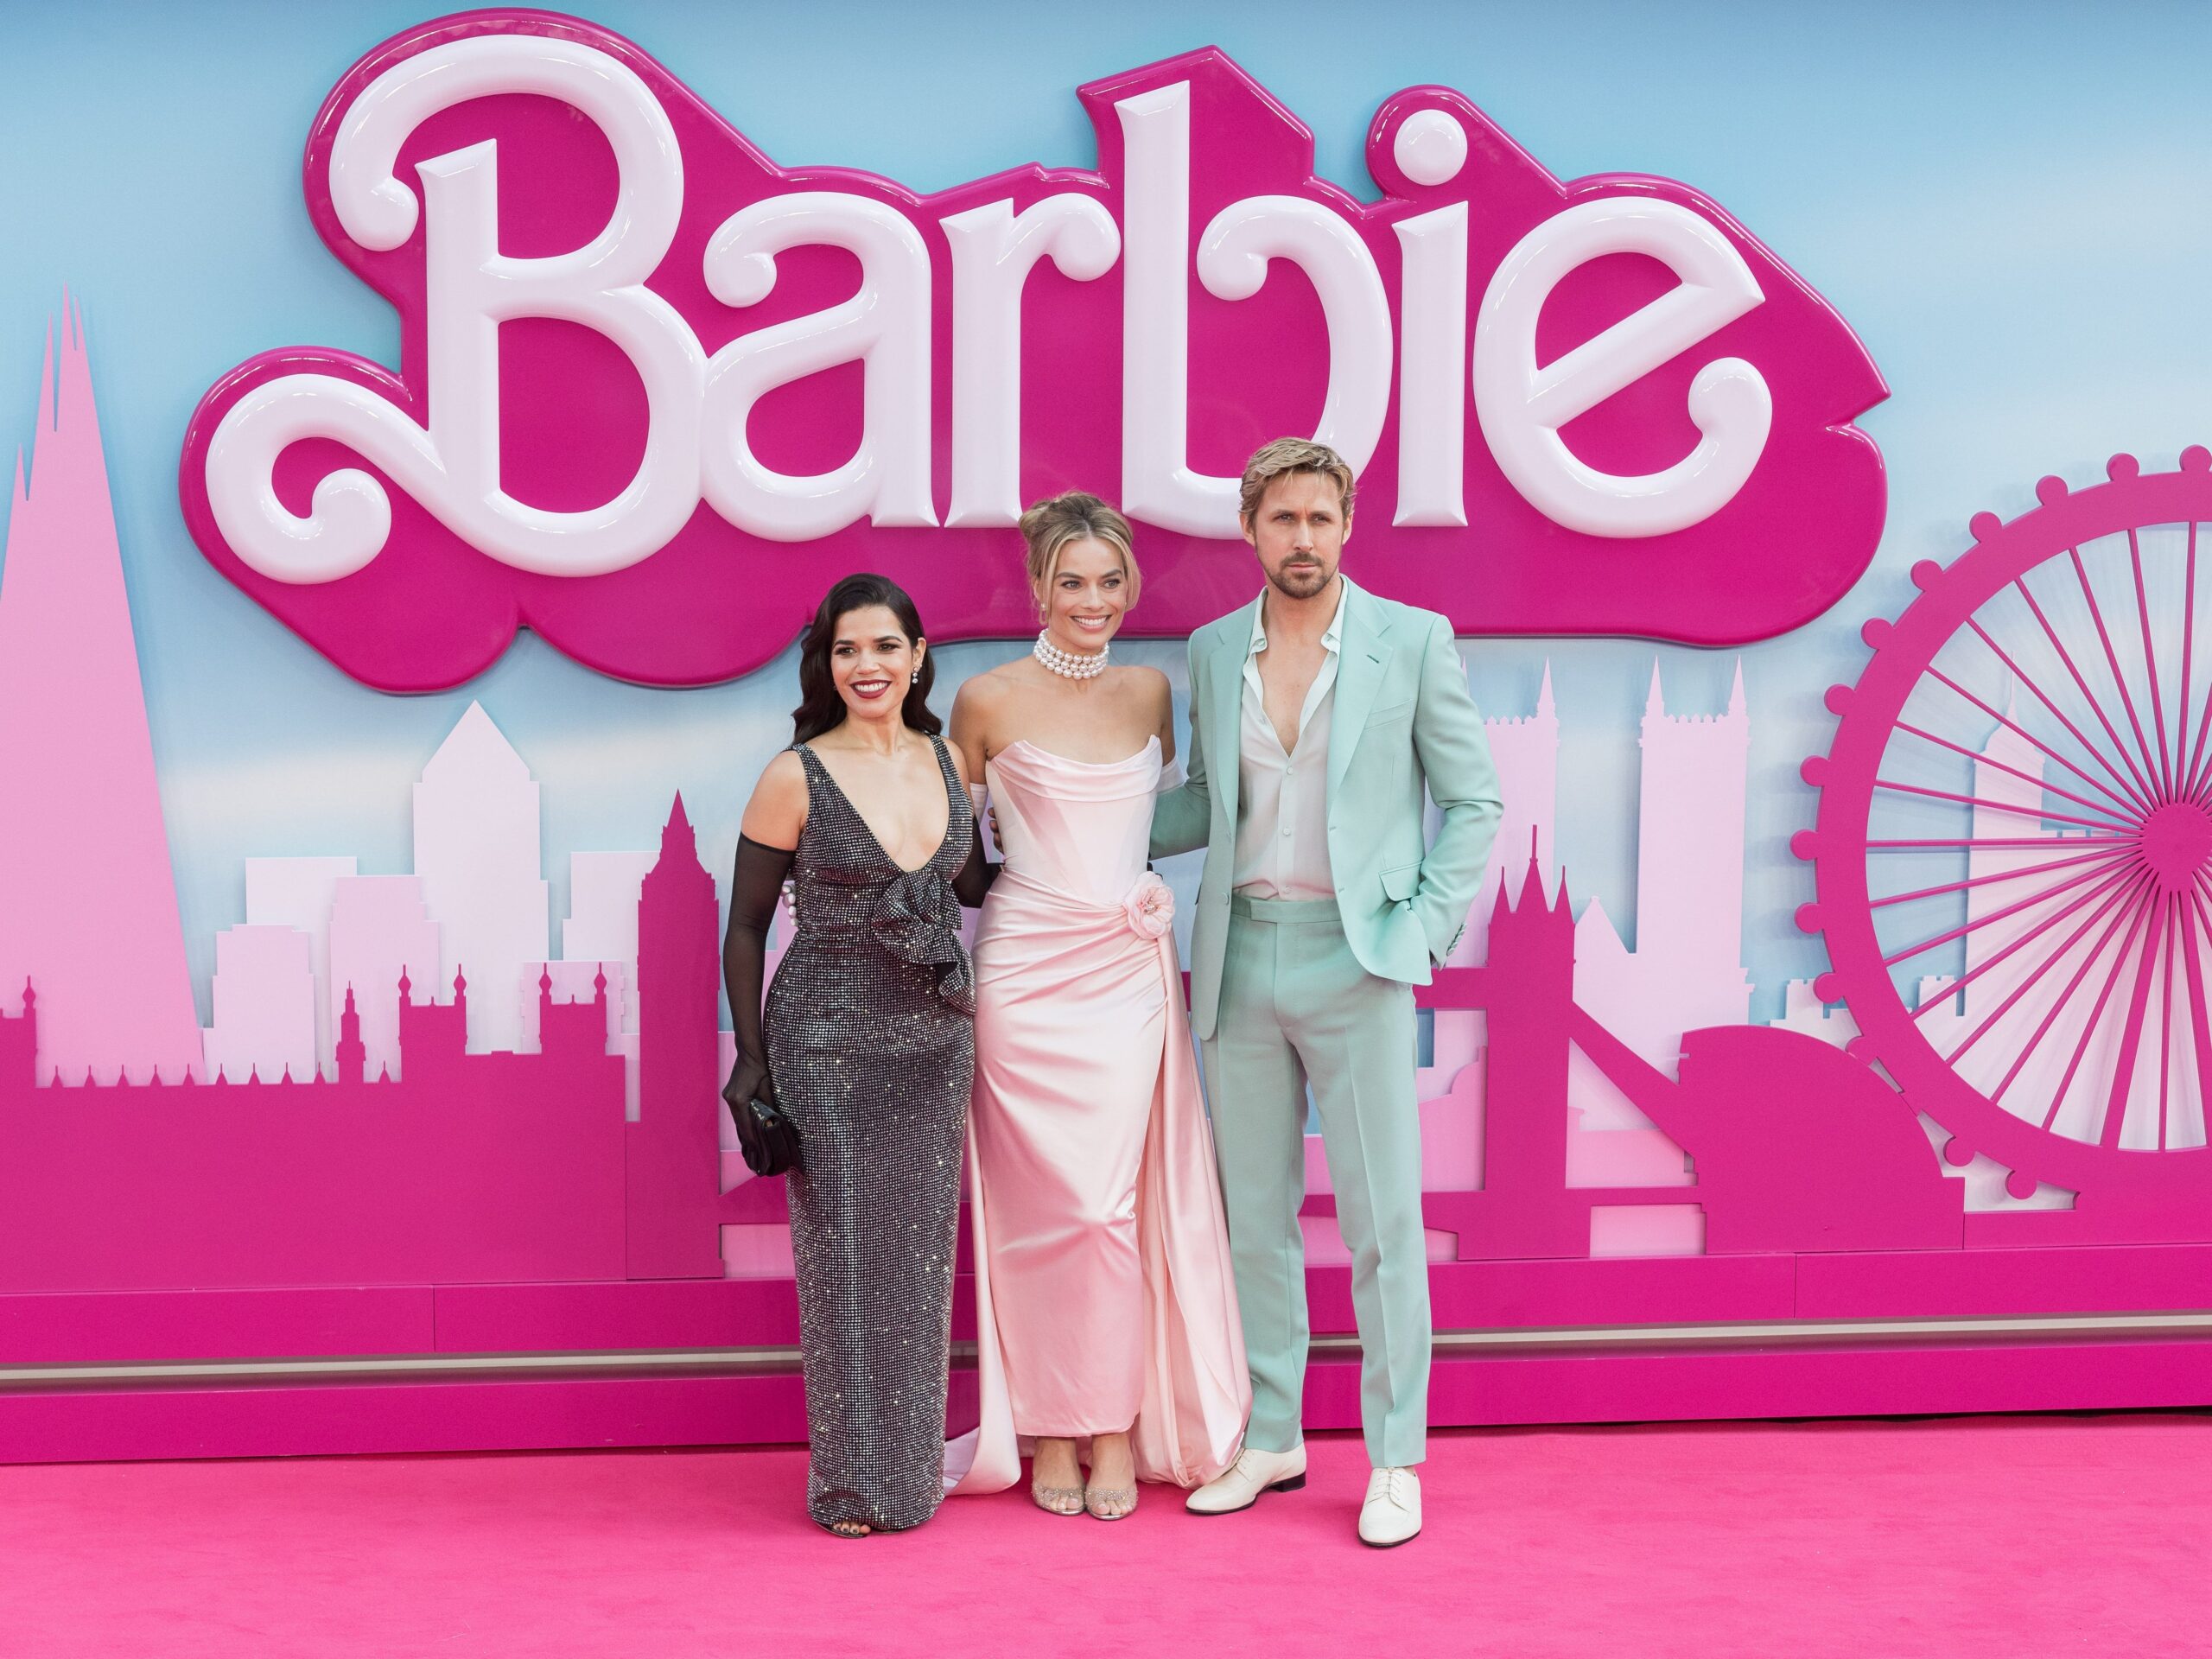 America Ferrera, Margot Robbie, and Ryan Gosling attend the European premiere of "Barbie" in London.